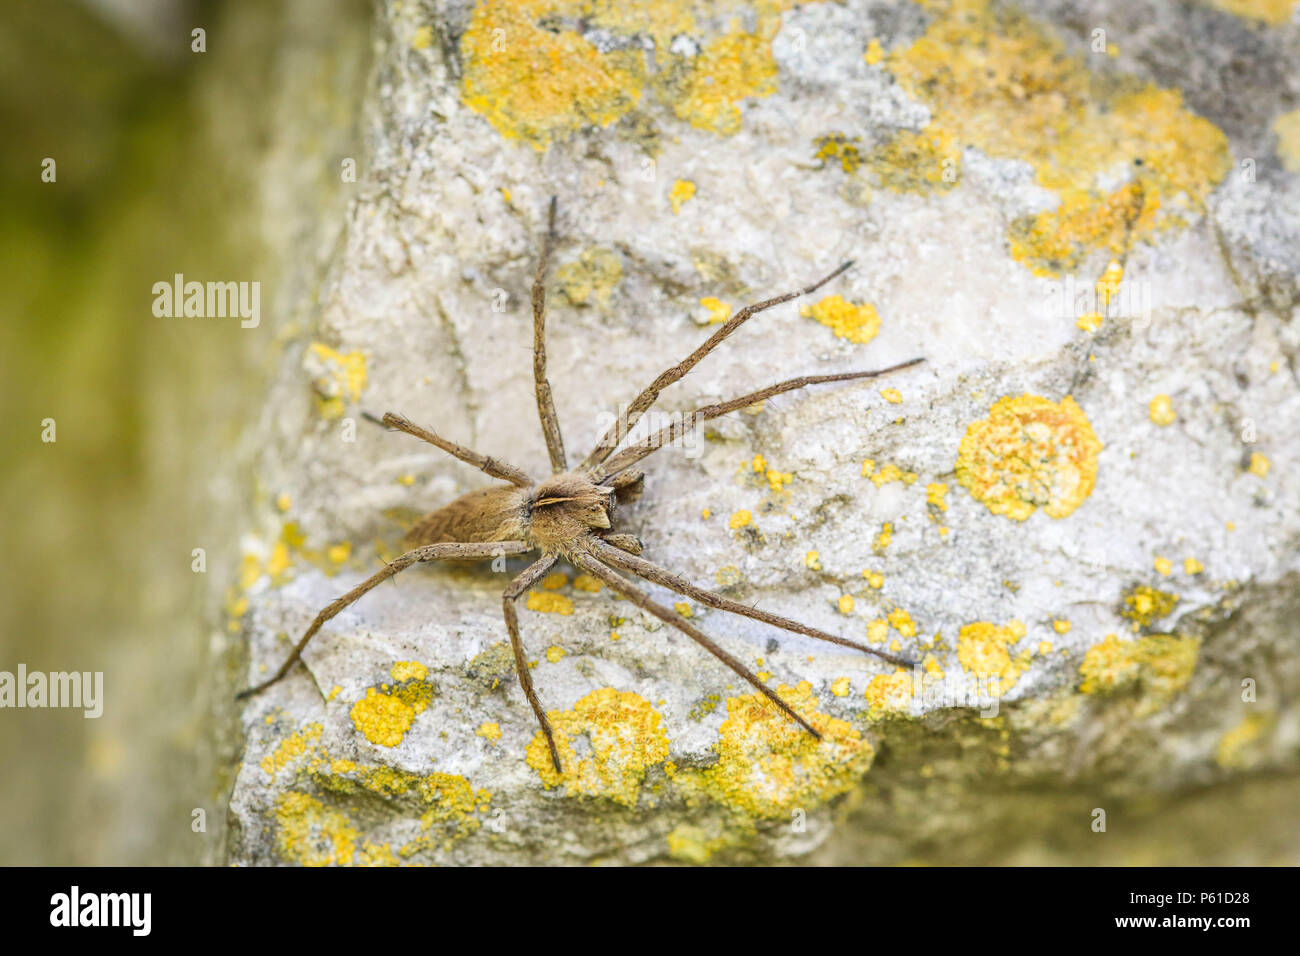 Solitary hobo spider - Tegenaria agrestis - on a rock Stock Photo